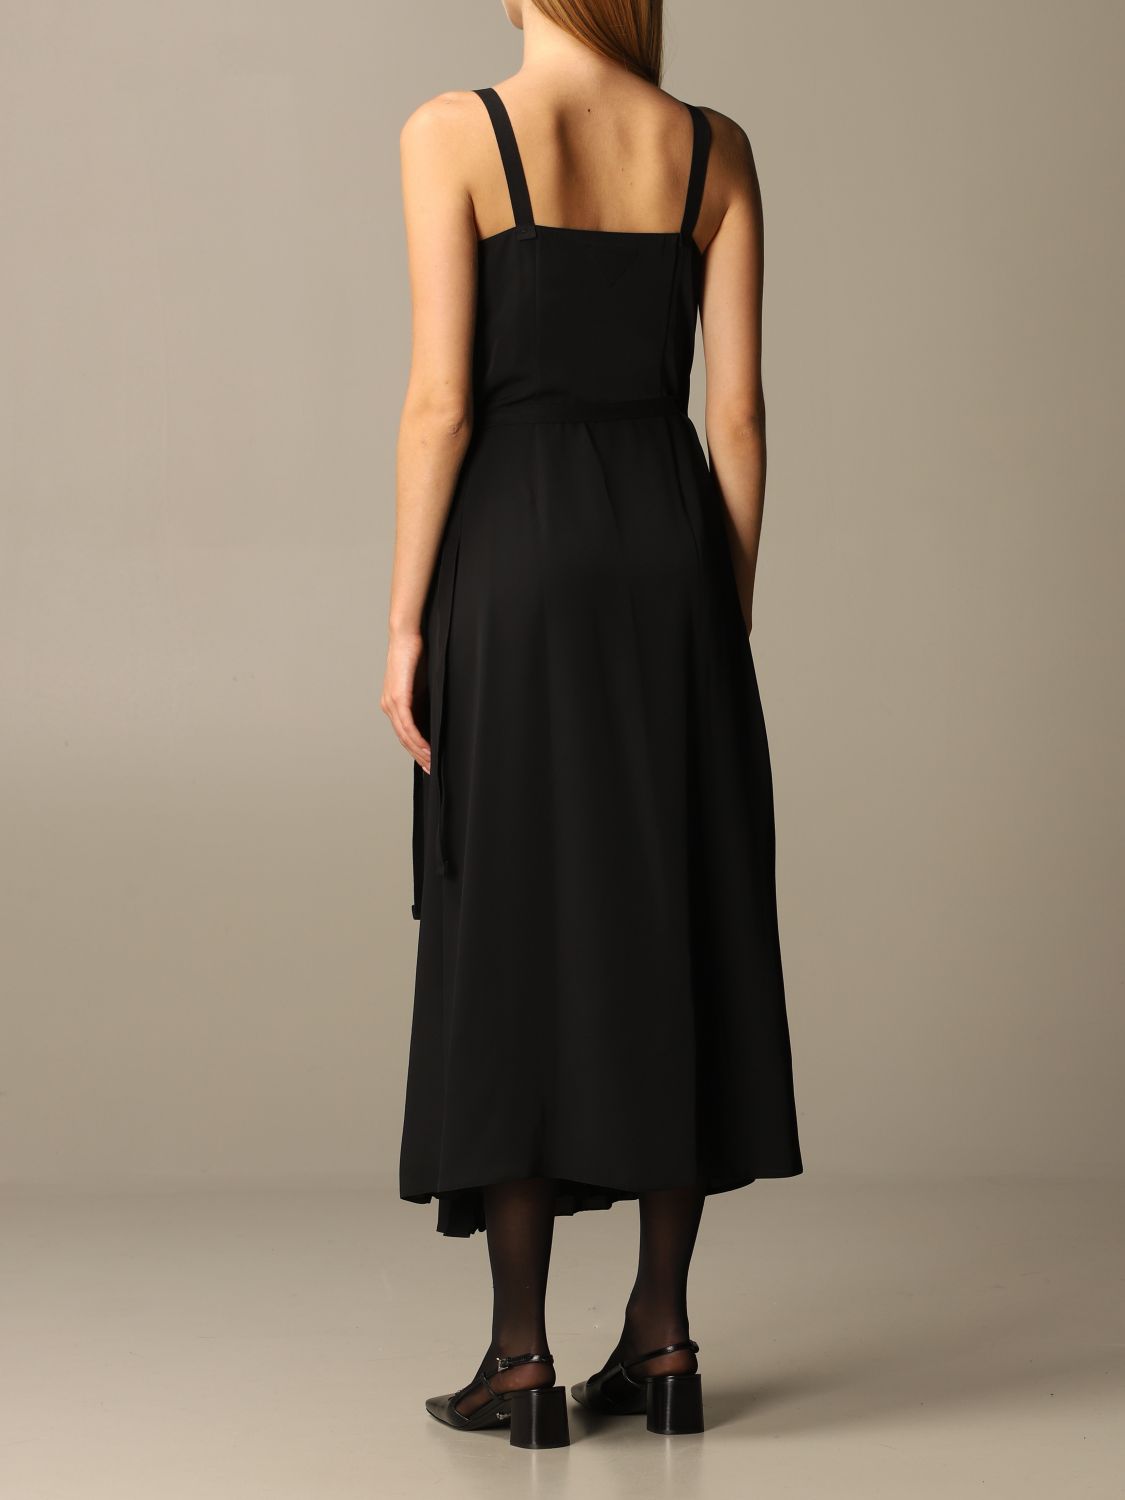 PRADA: dress for woman - Black | Prada dress P3A961 WHI online on 